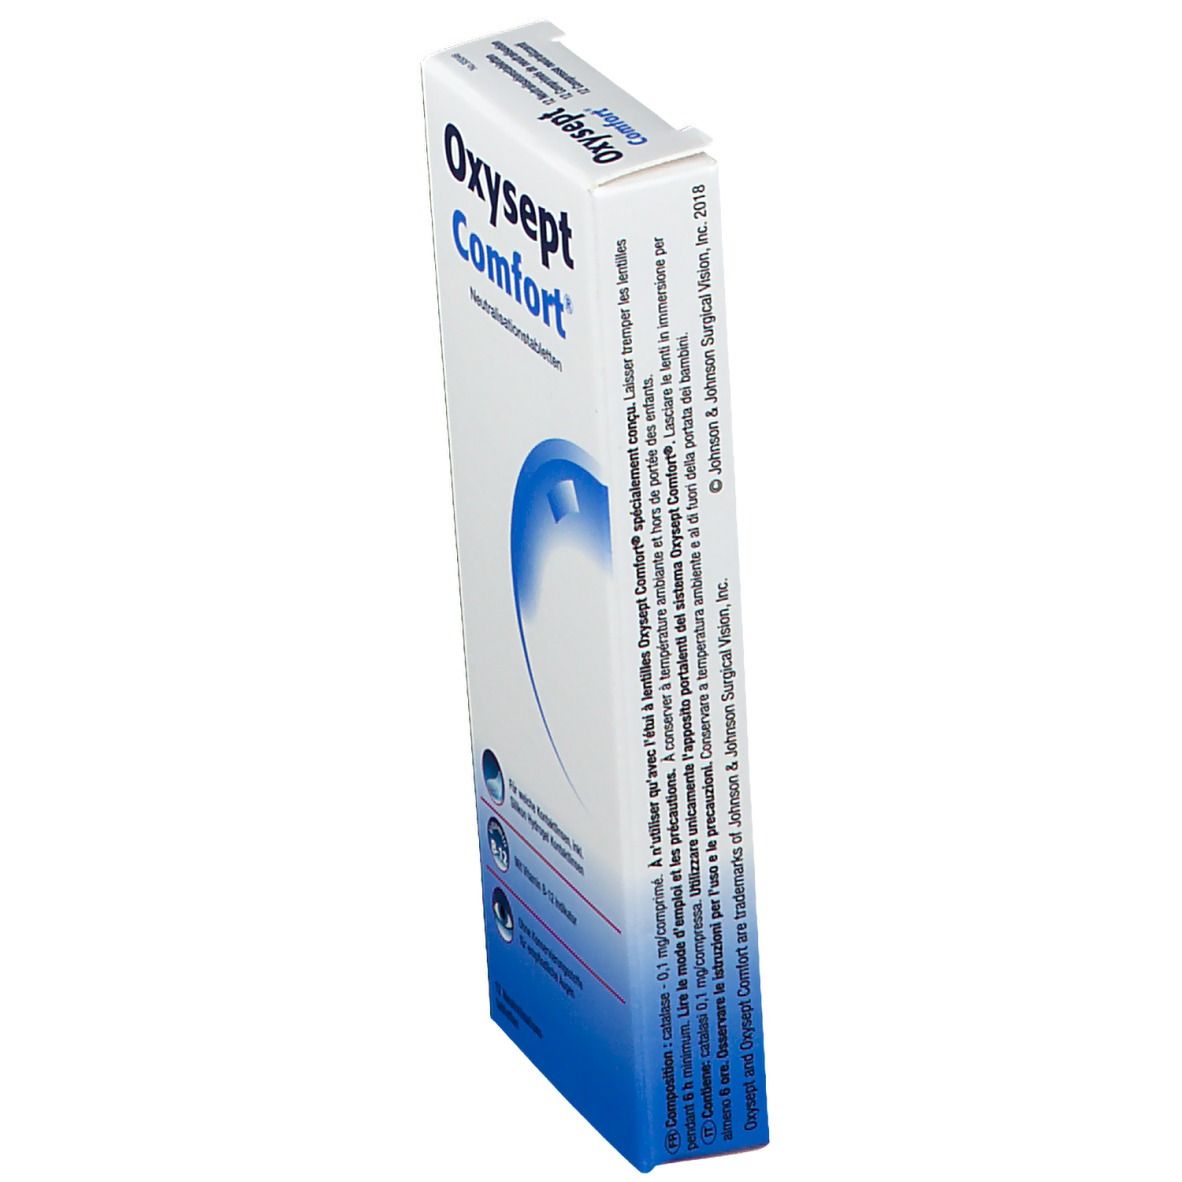 Oxysept® Comfort Neutralisationstabletten